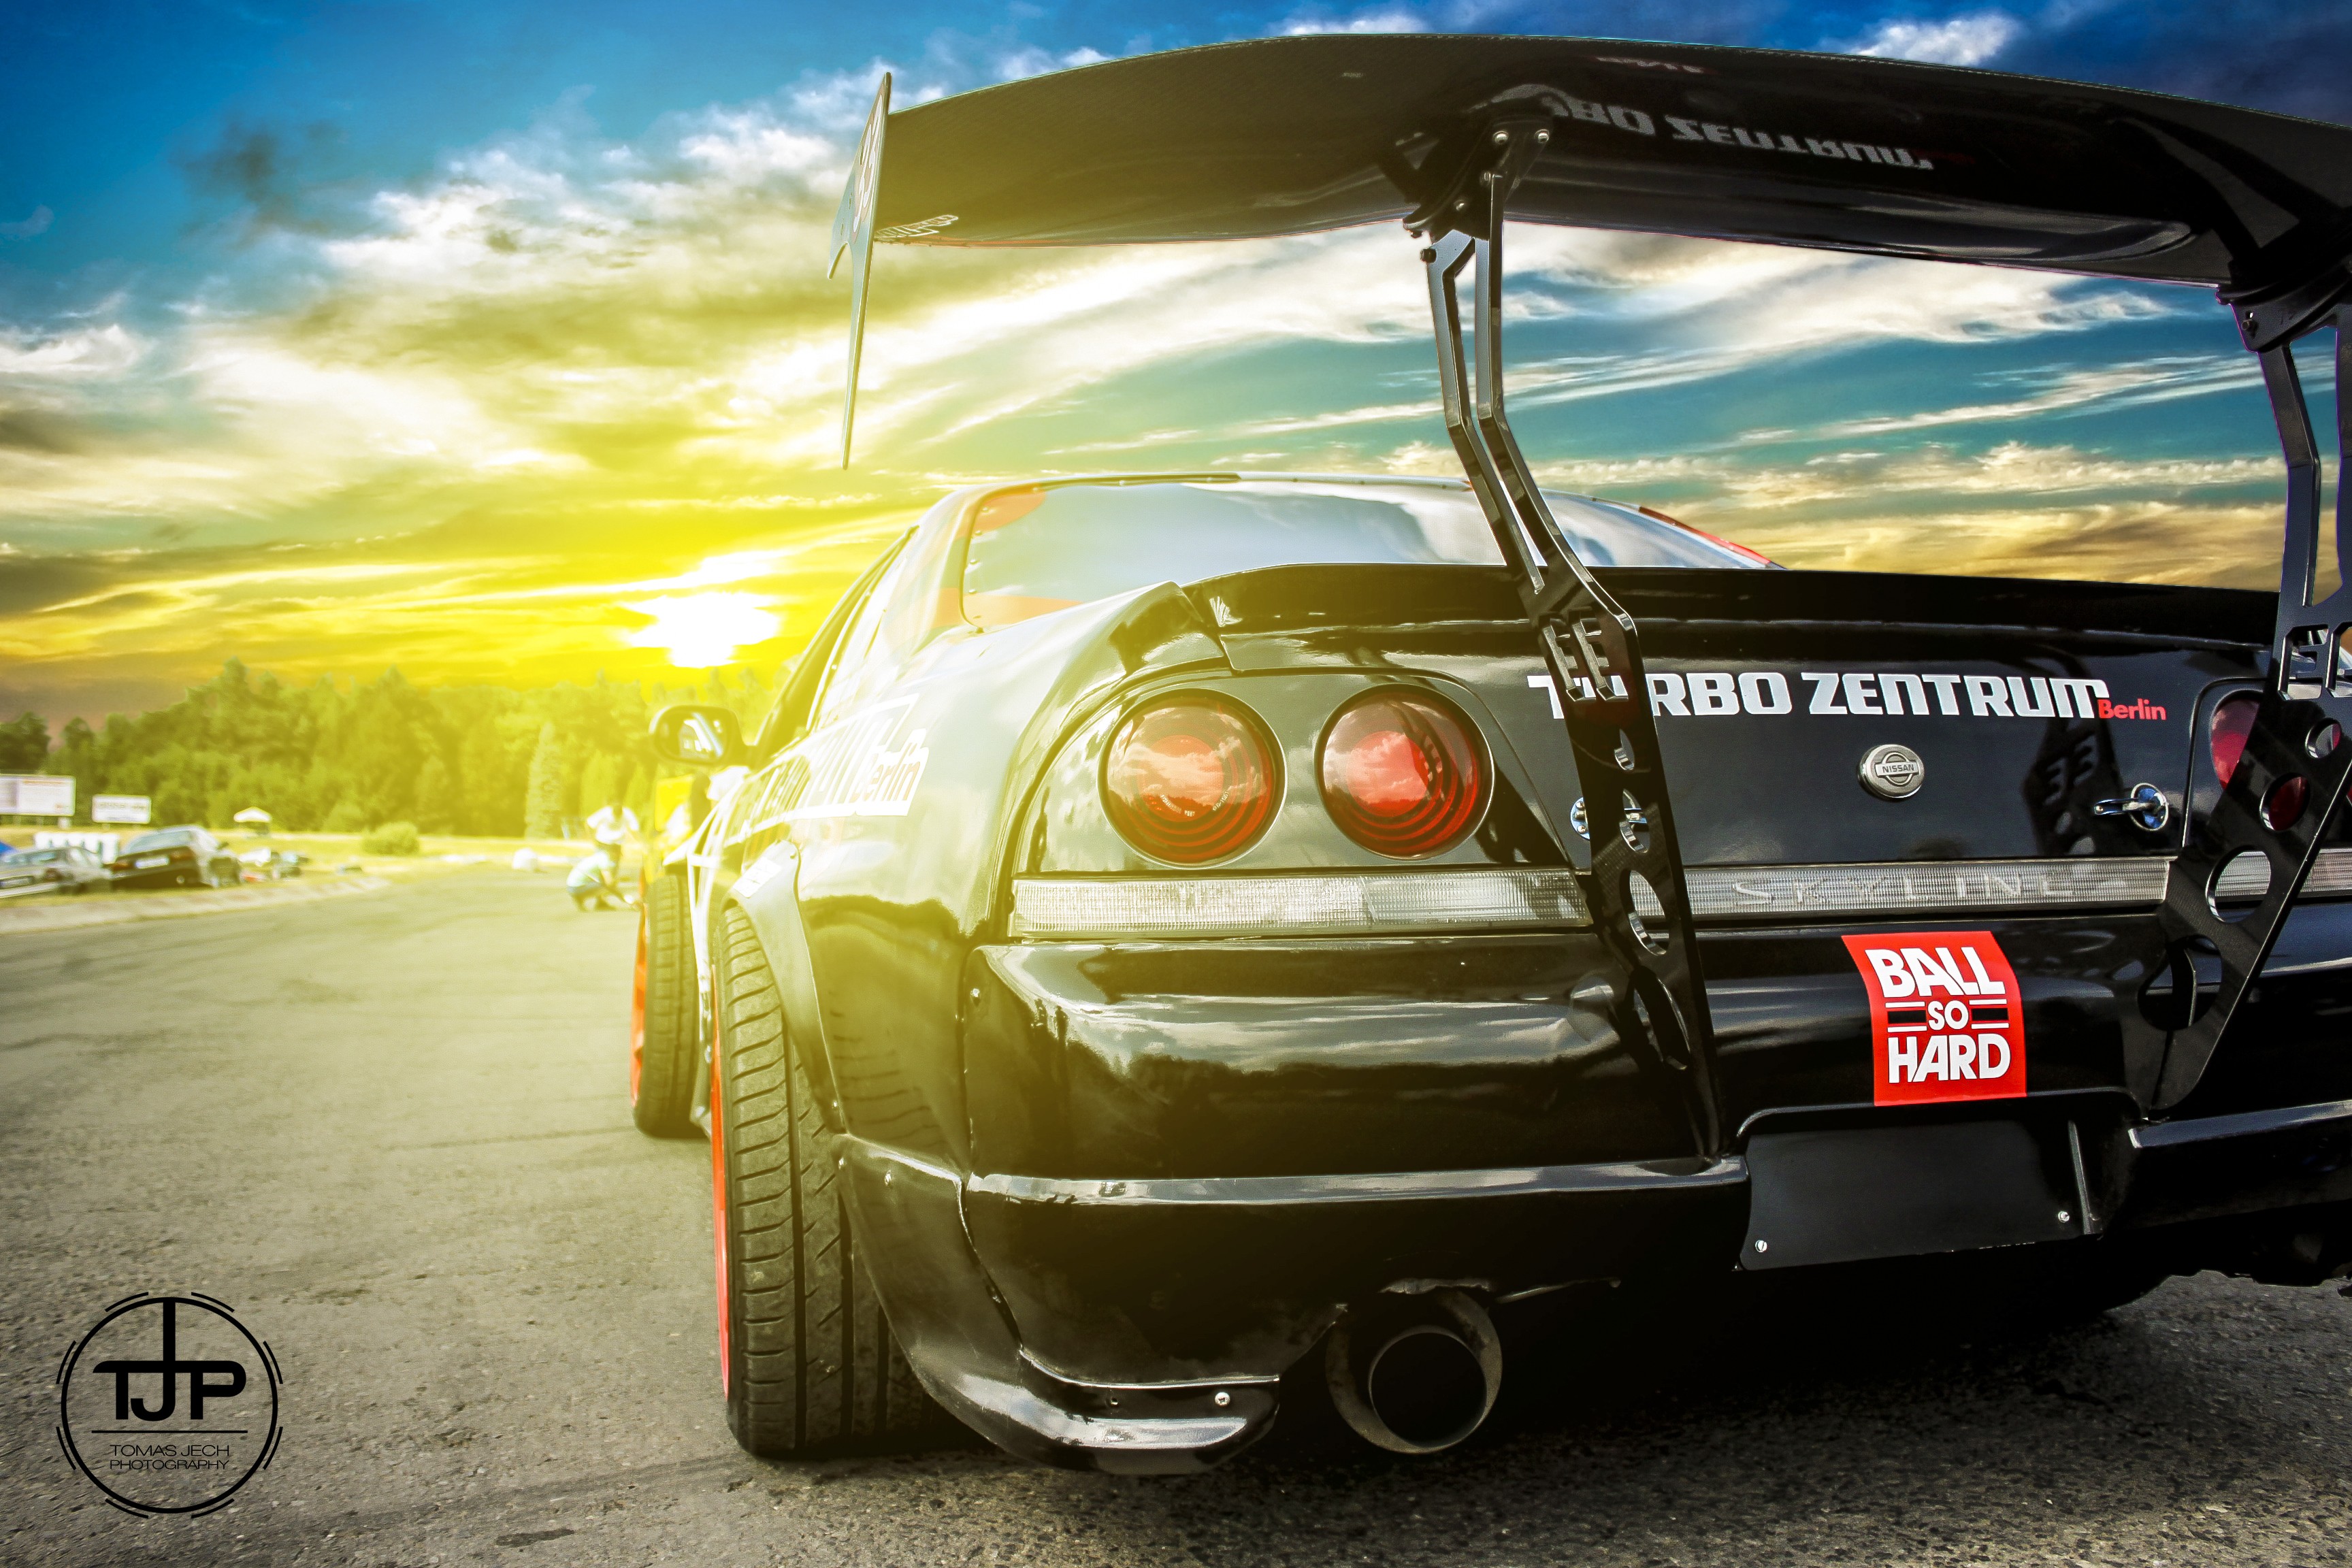 Nissan Skyline Gt R R33 Car Wallpapers Hd Desktop And Mobile Backgrounds